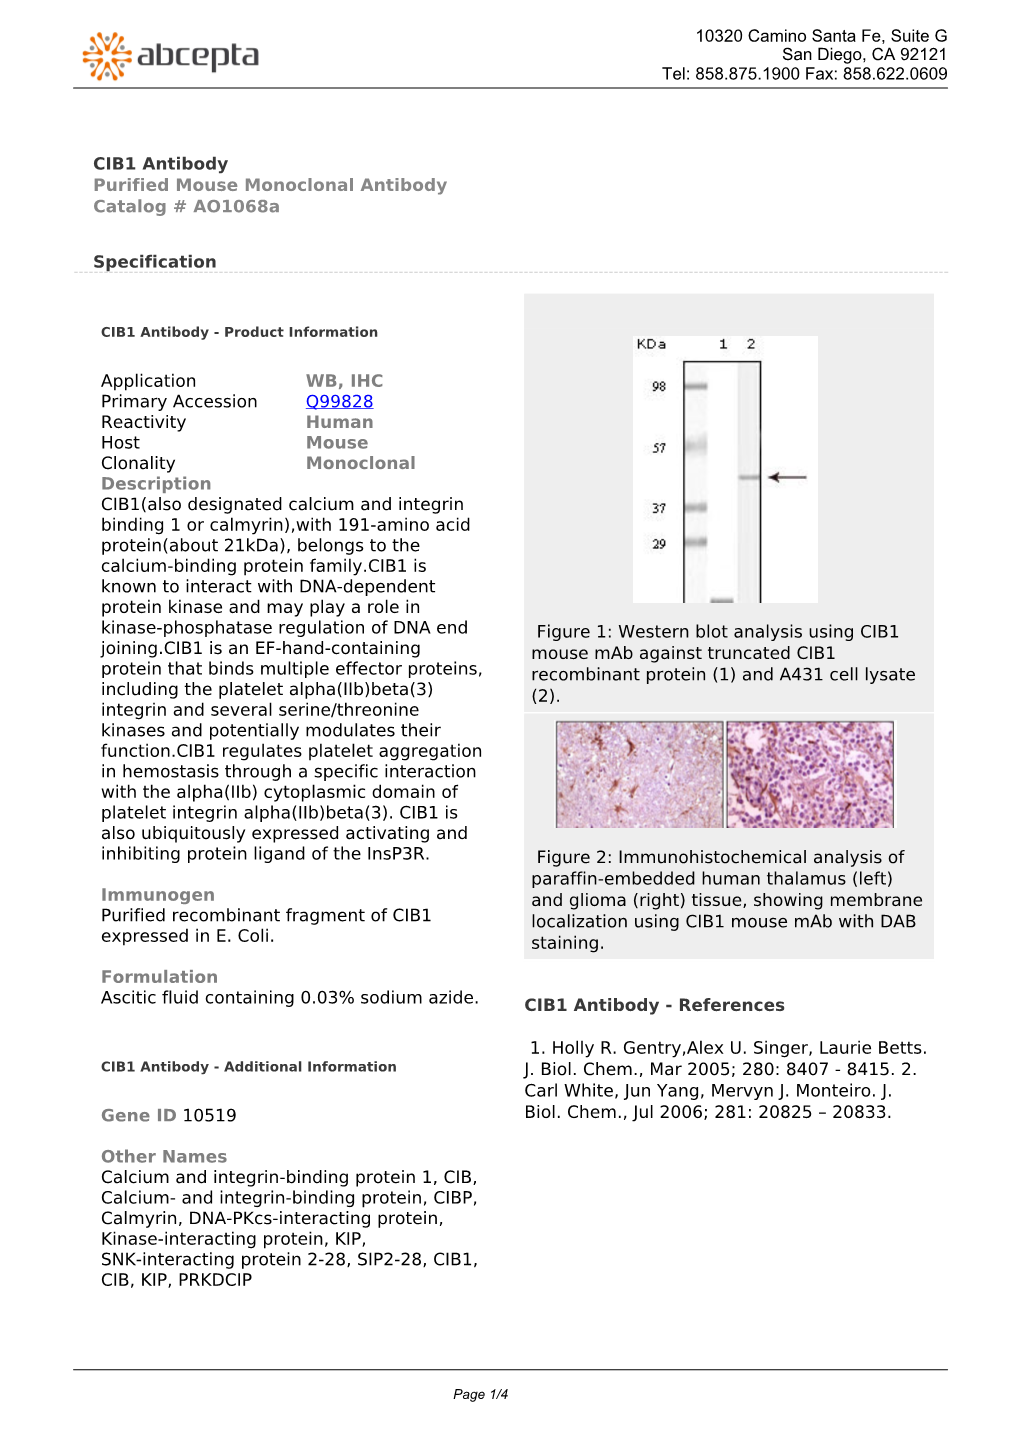 CIB1 Antibody Purified Mouse Monoclonal Antibody Catalog # Ao1068a